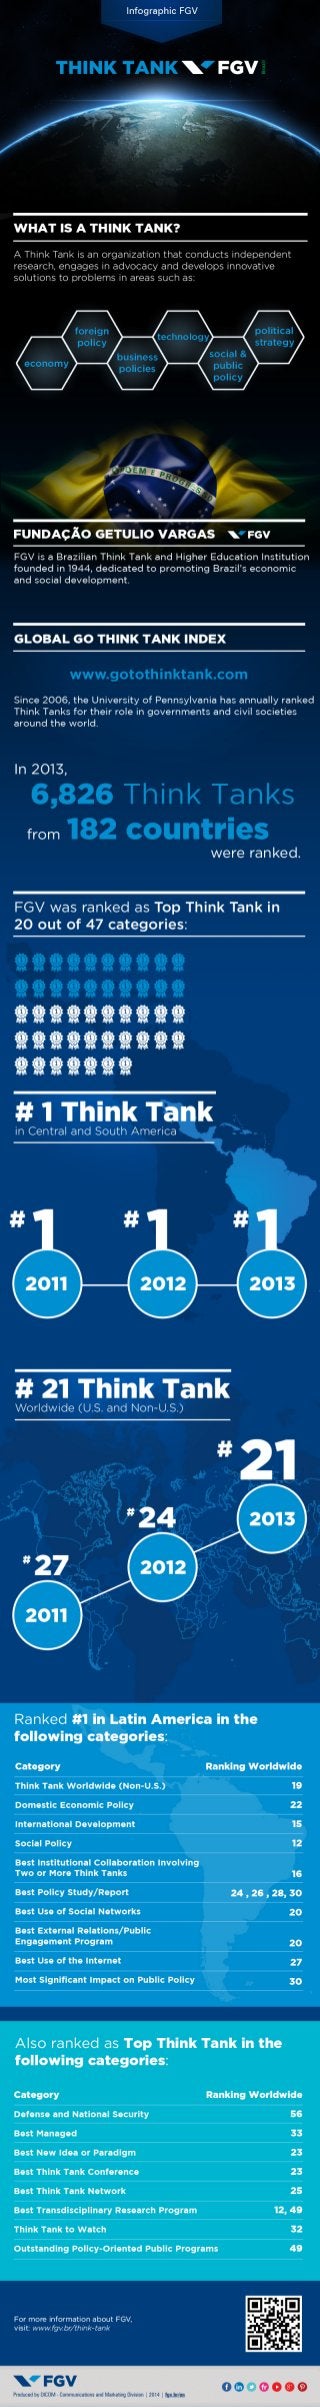 FGV Brazil - Think Tank Ranking